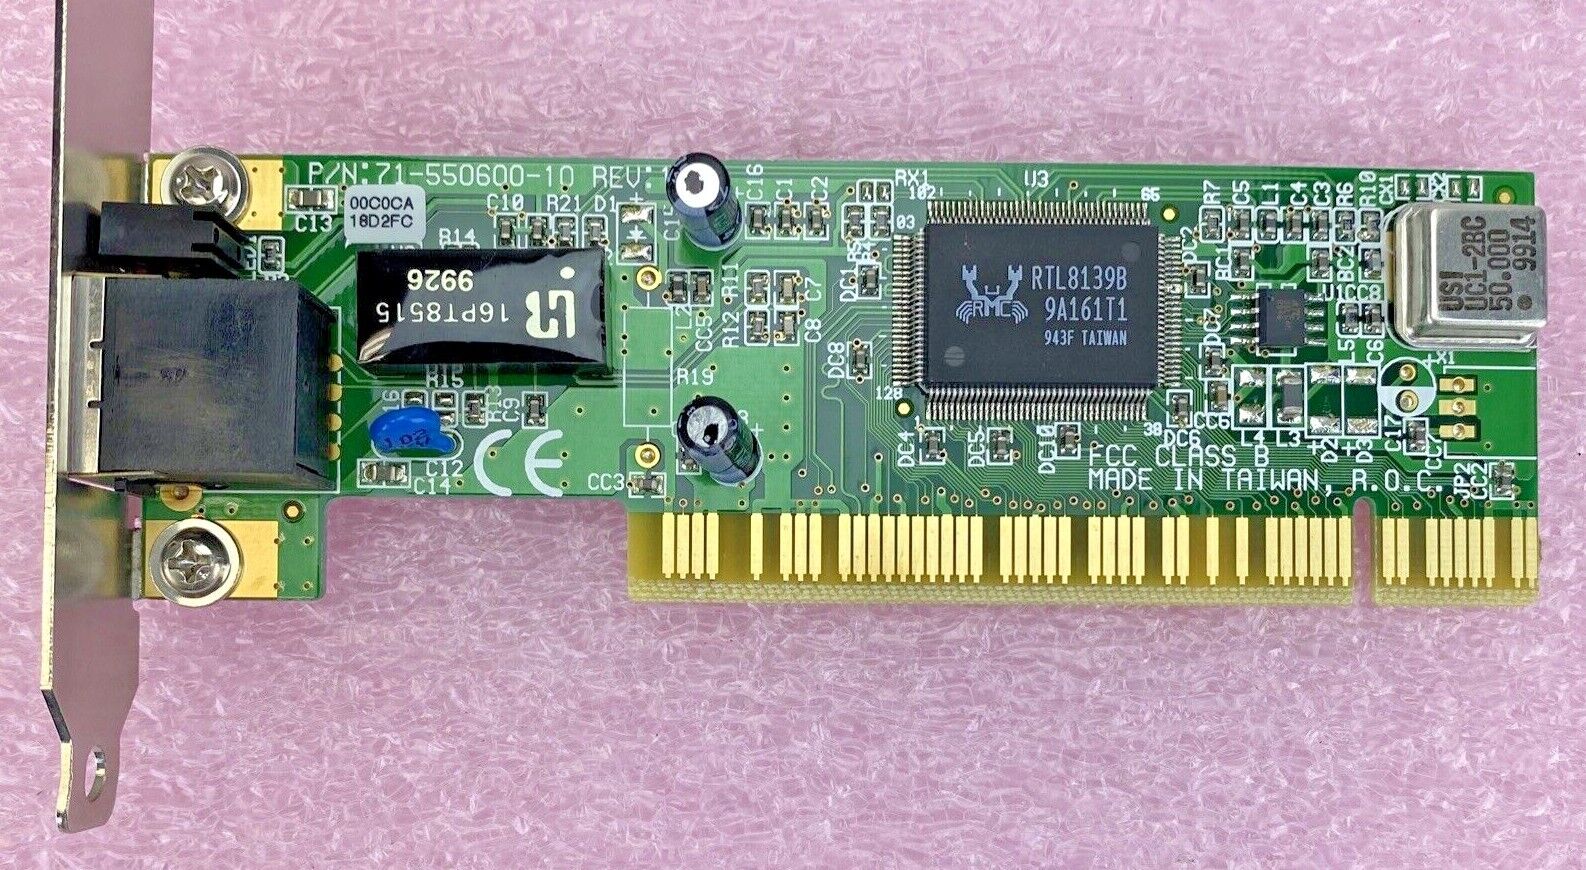 NetSurf GFC2206 70-550600-11 Rev1.1 Realtek RTL8139B LAN Network PCI Adapter